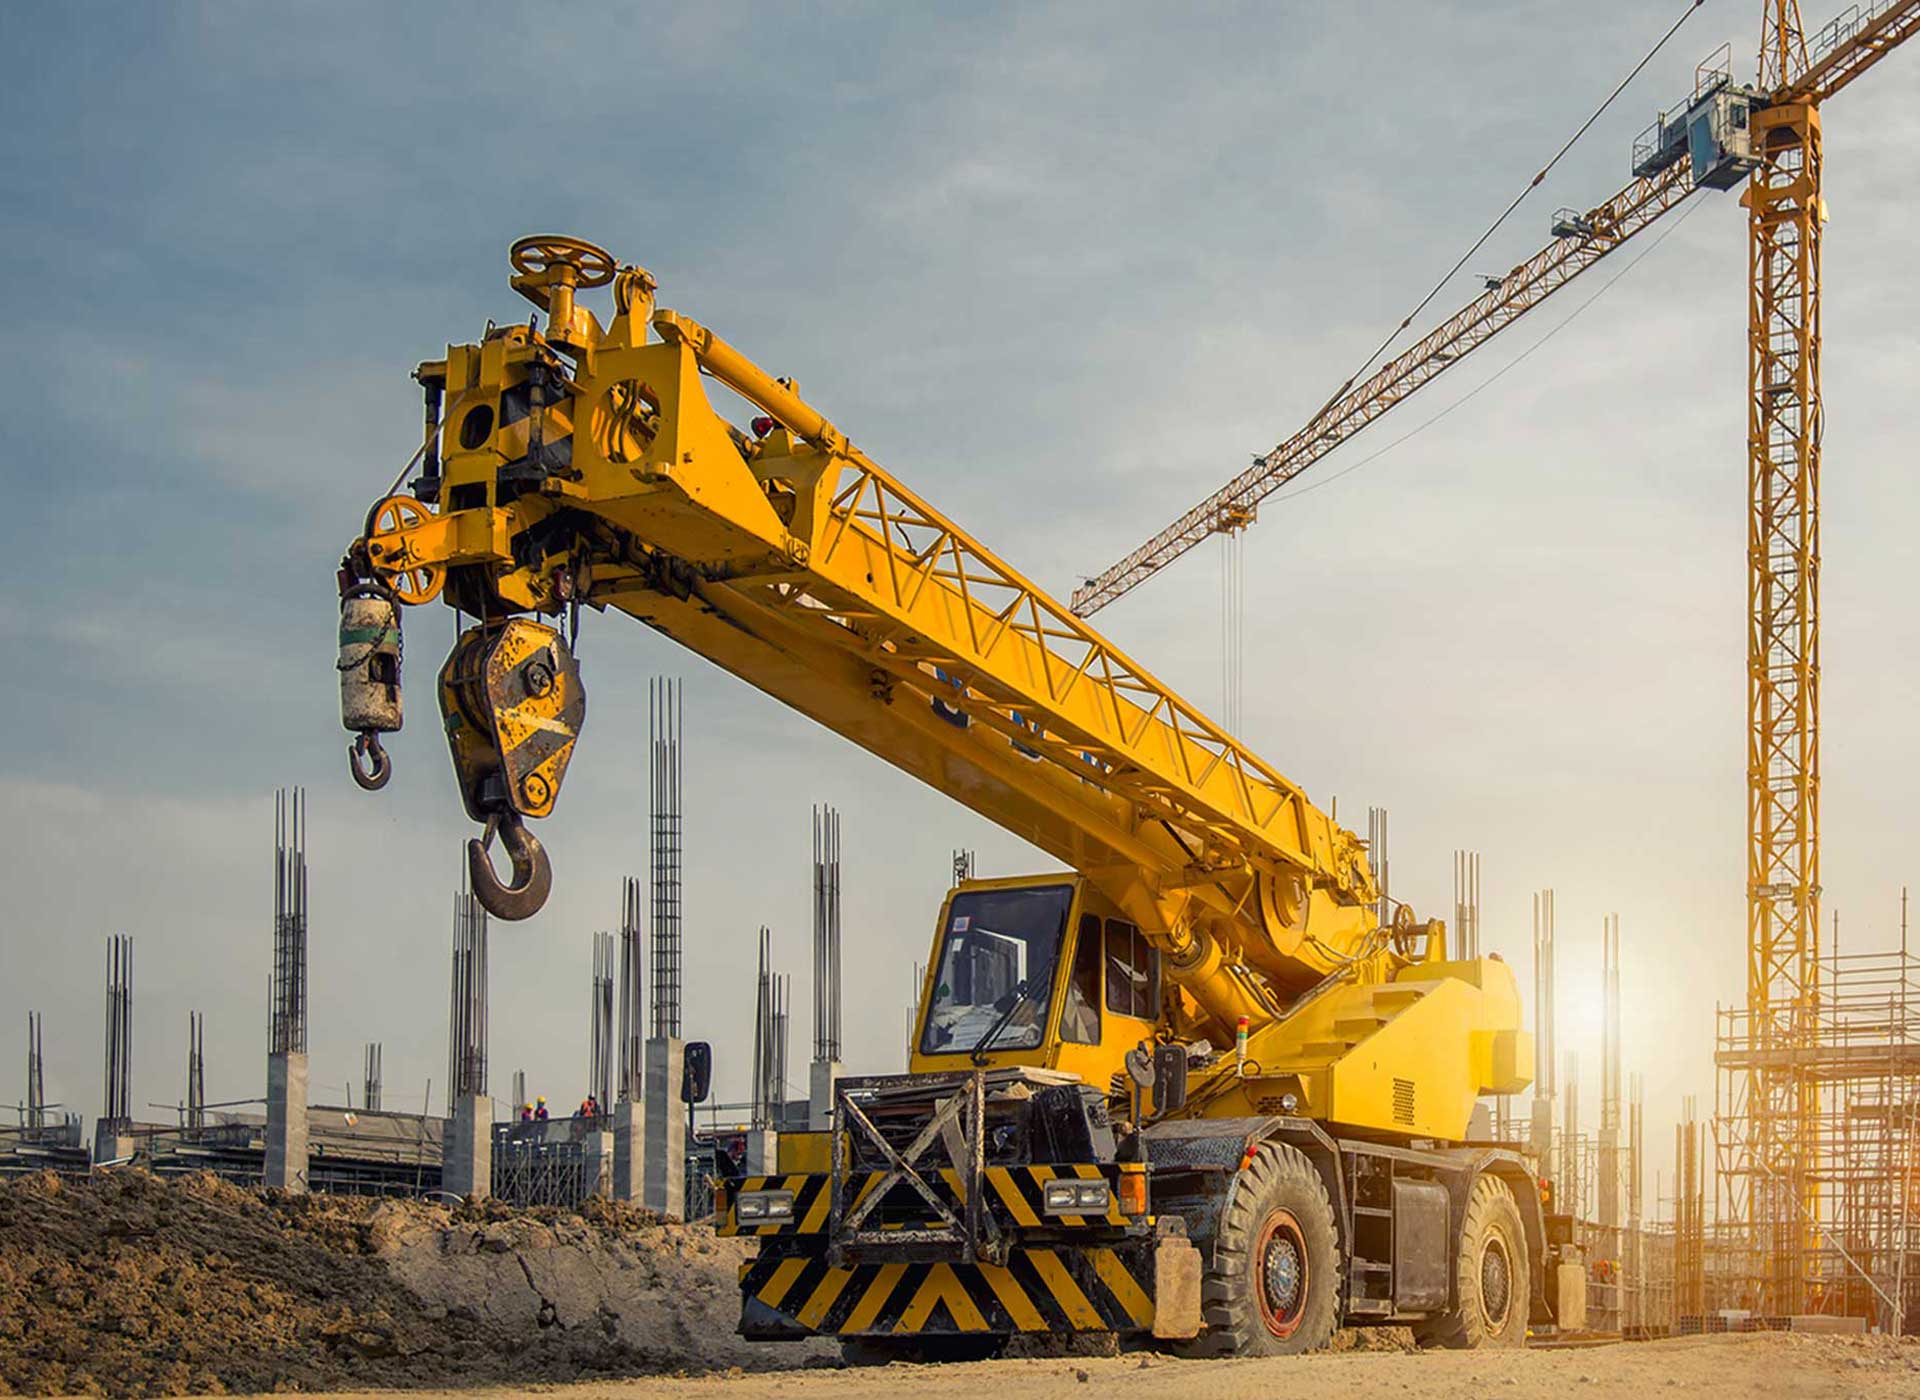 Construction Equipment Financing